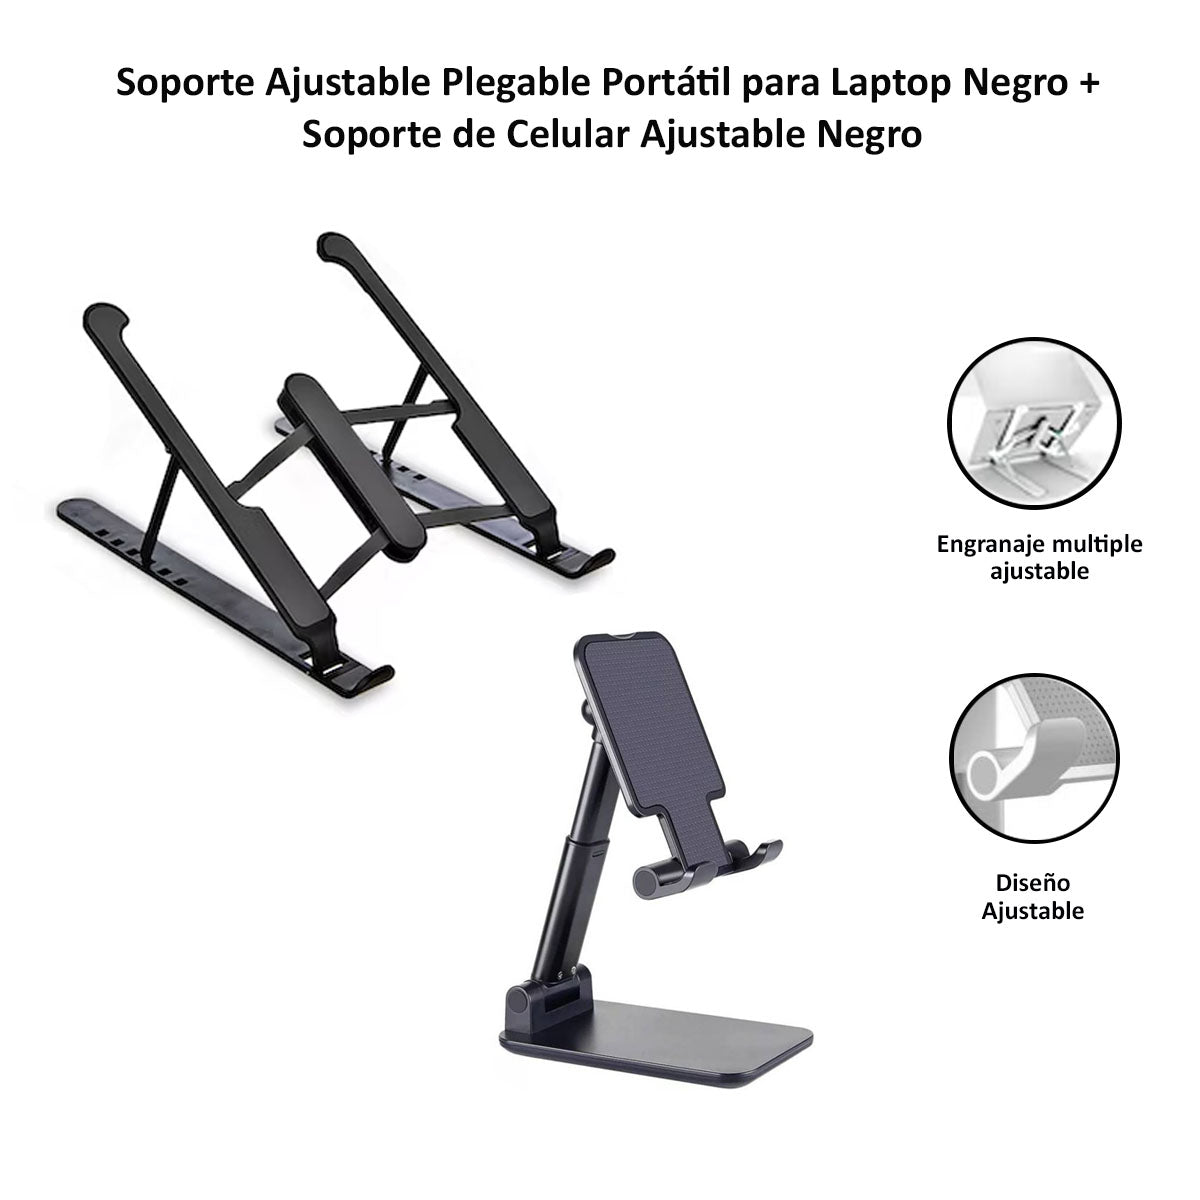 Soporte Plegable Portátil para Laptop + Soporte para Celular Ajustable Negro